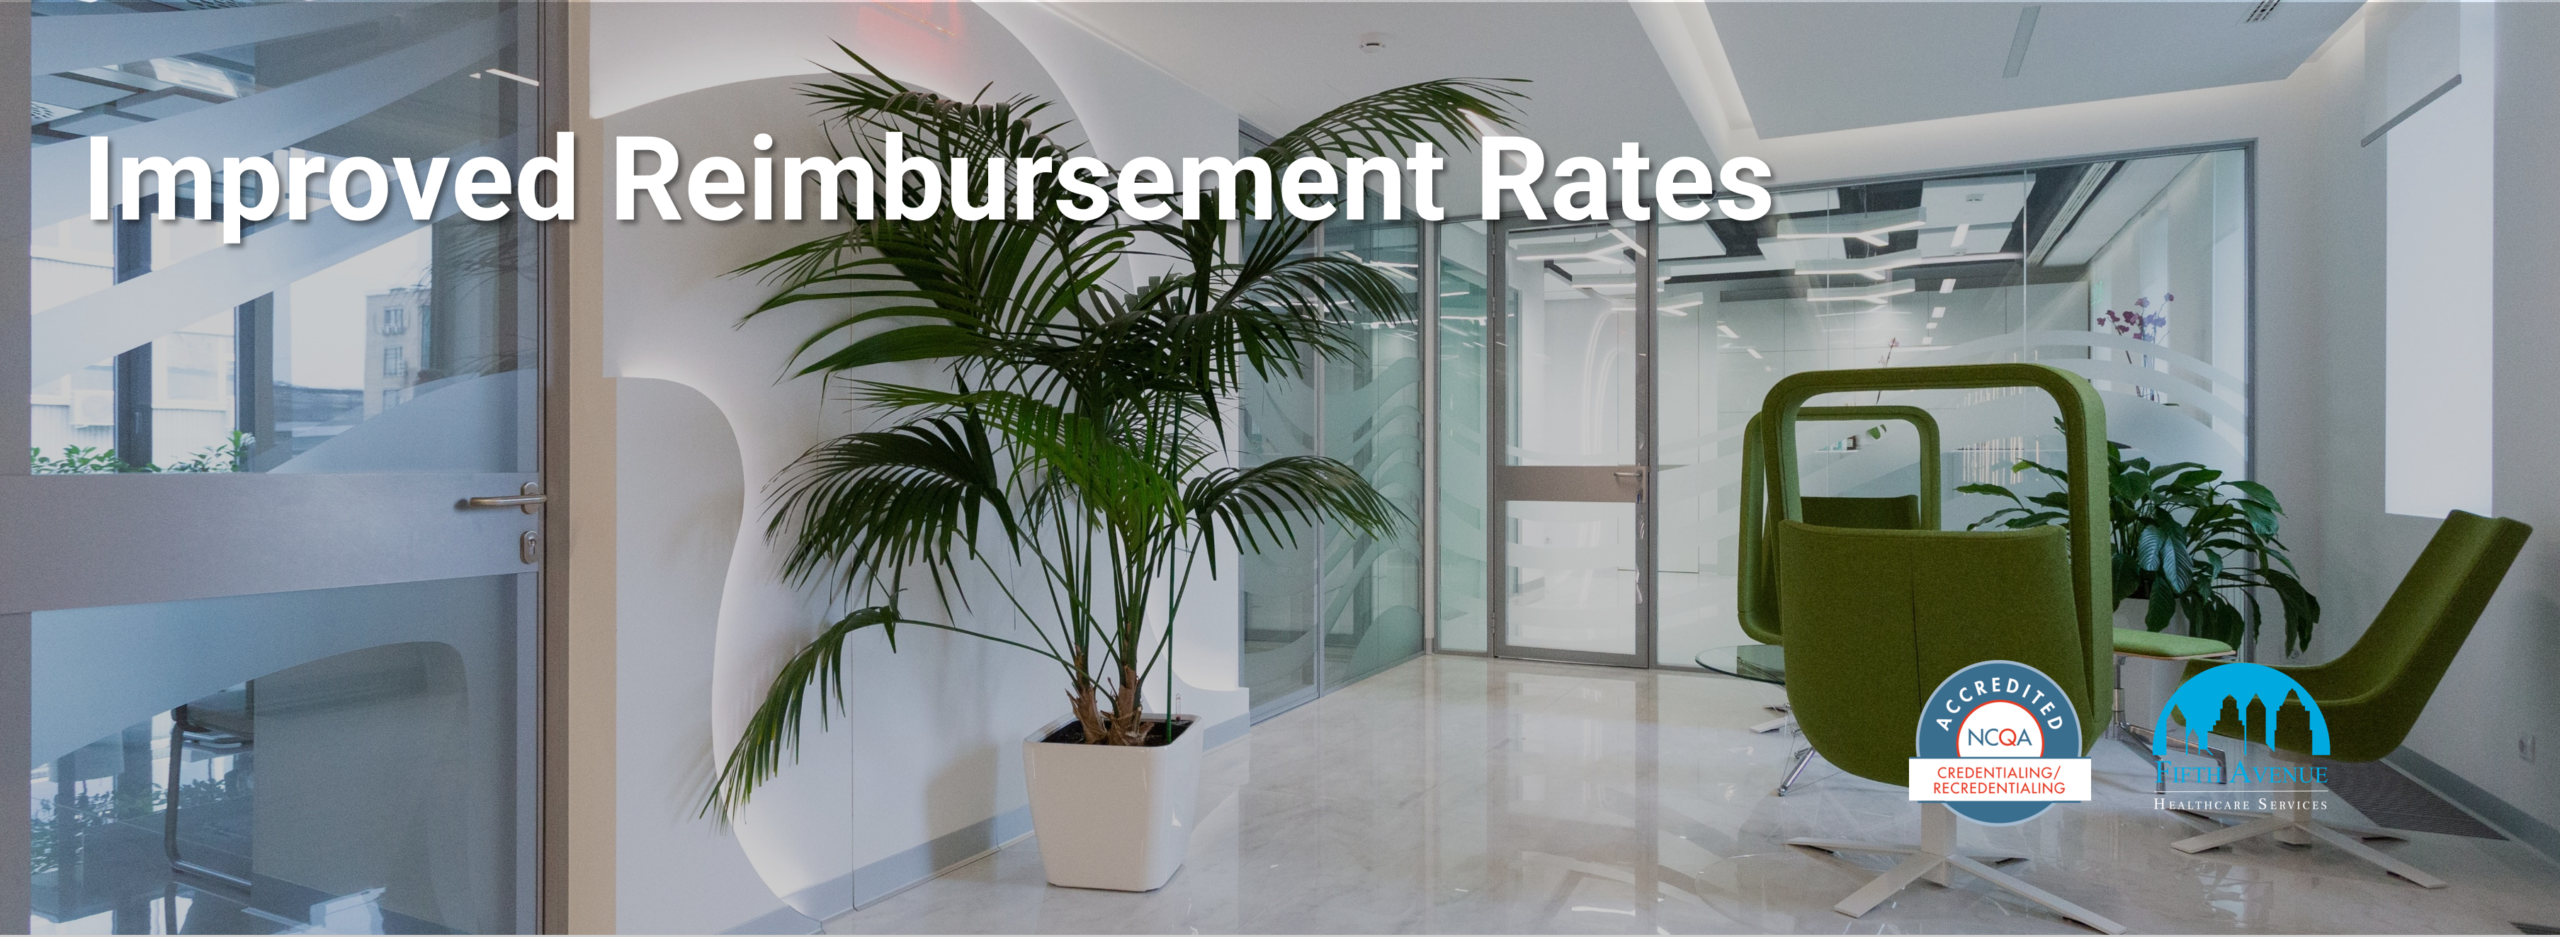 Improved Reimbursement Rates